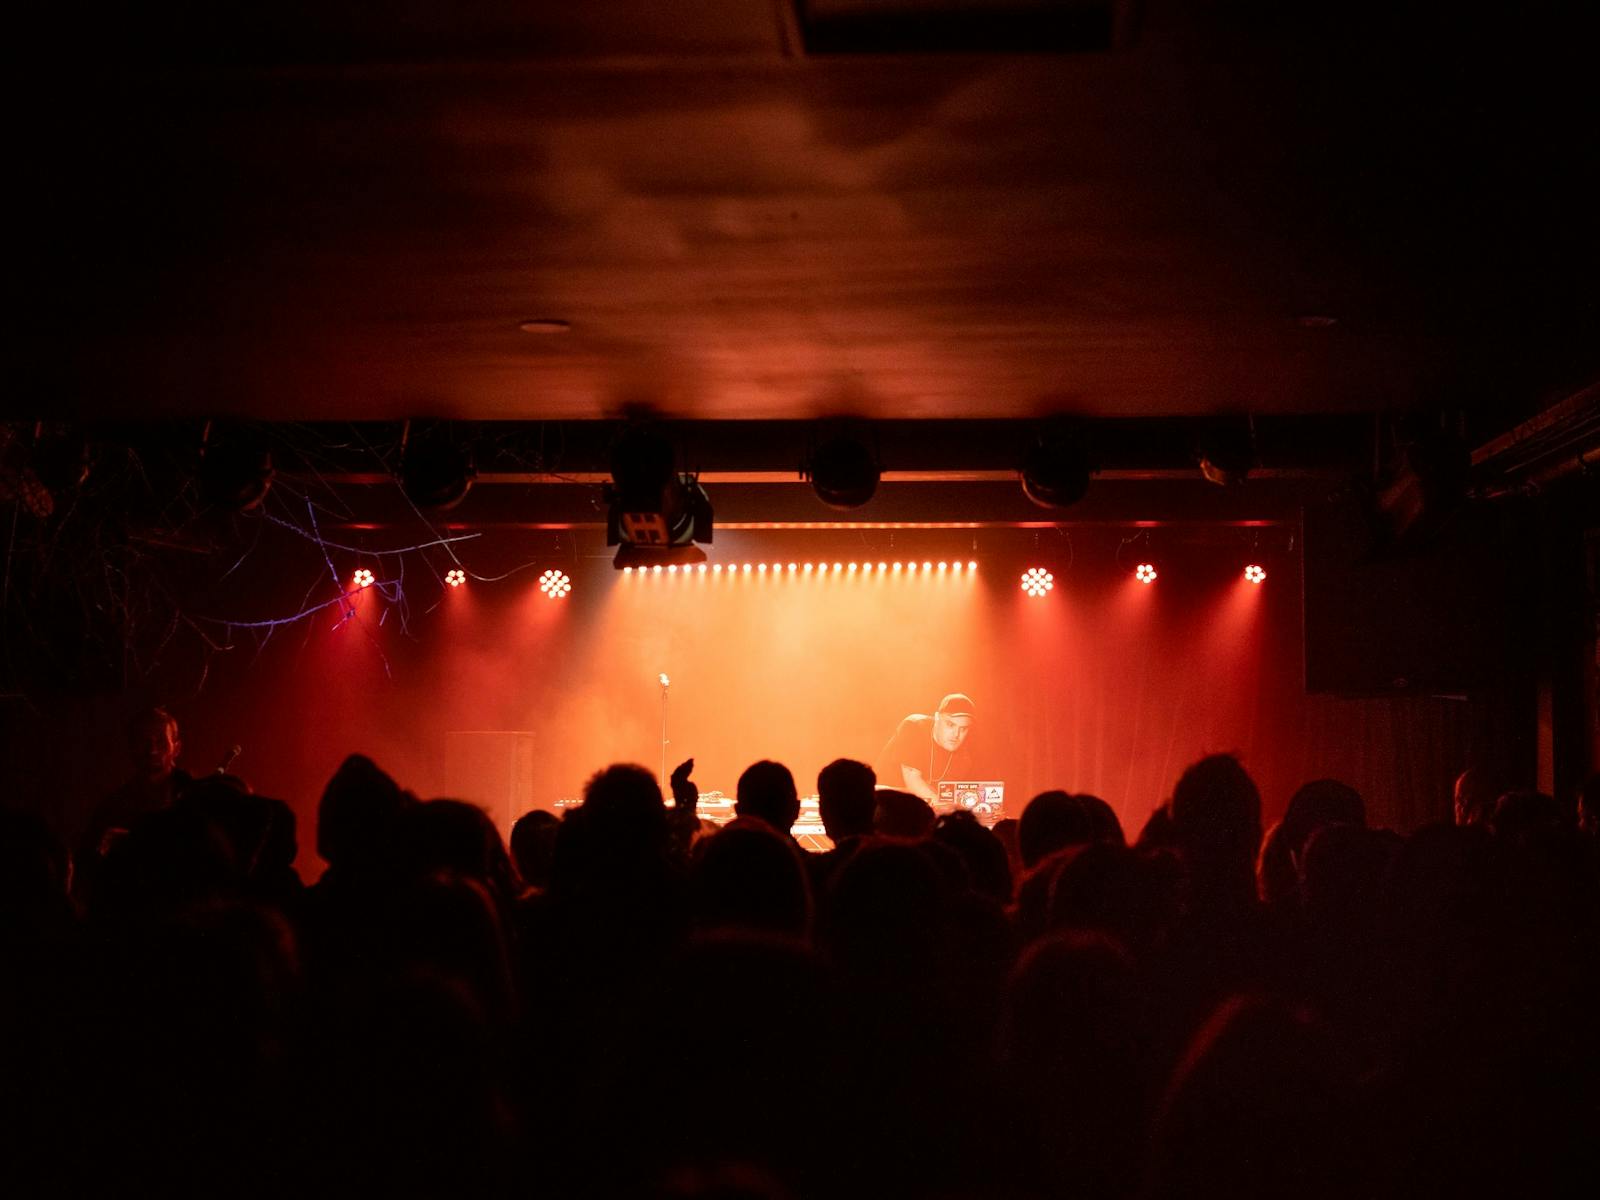 A DJ plays decks on an upraised stage with orange lighting, a crowd looks on